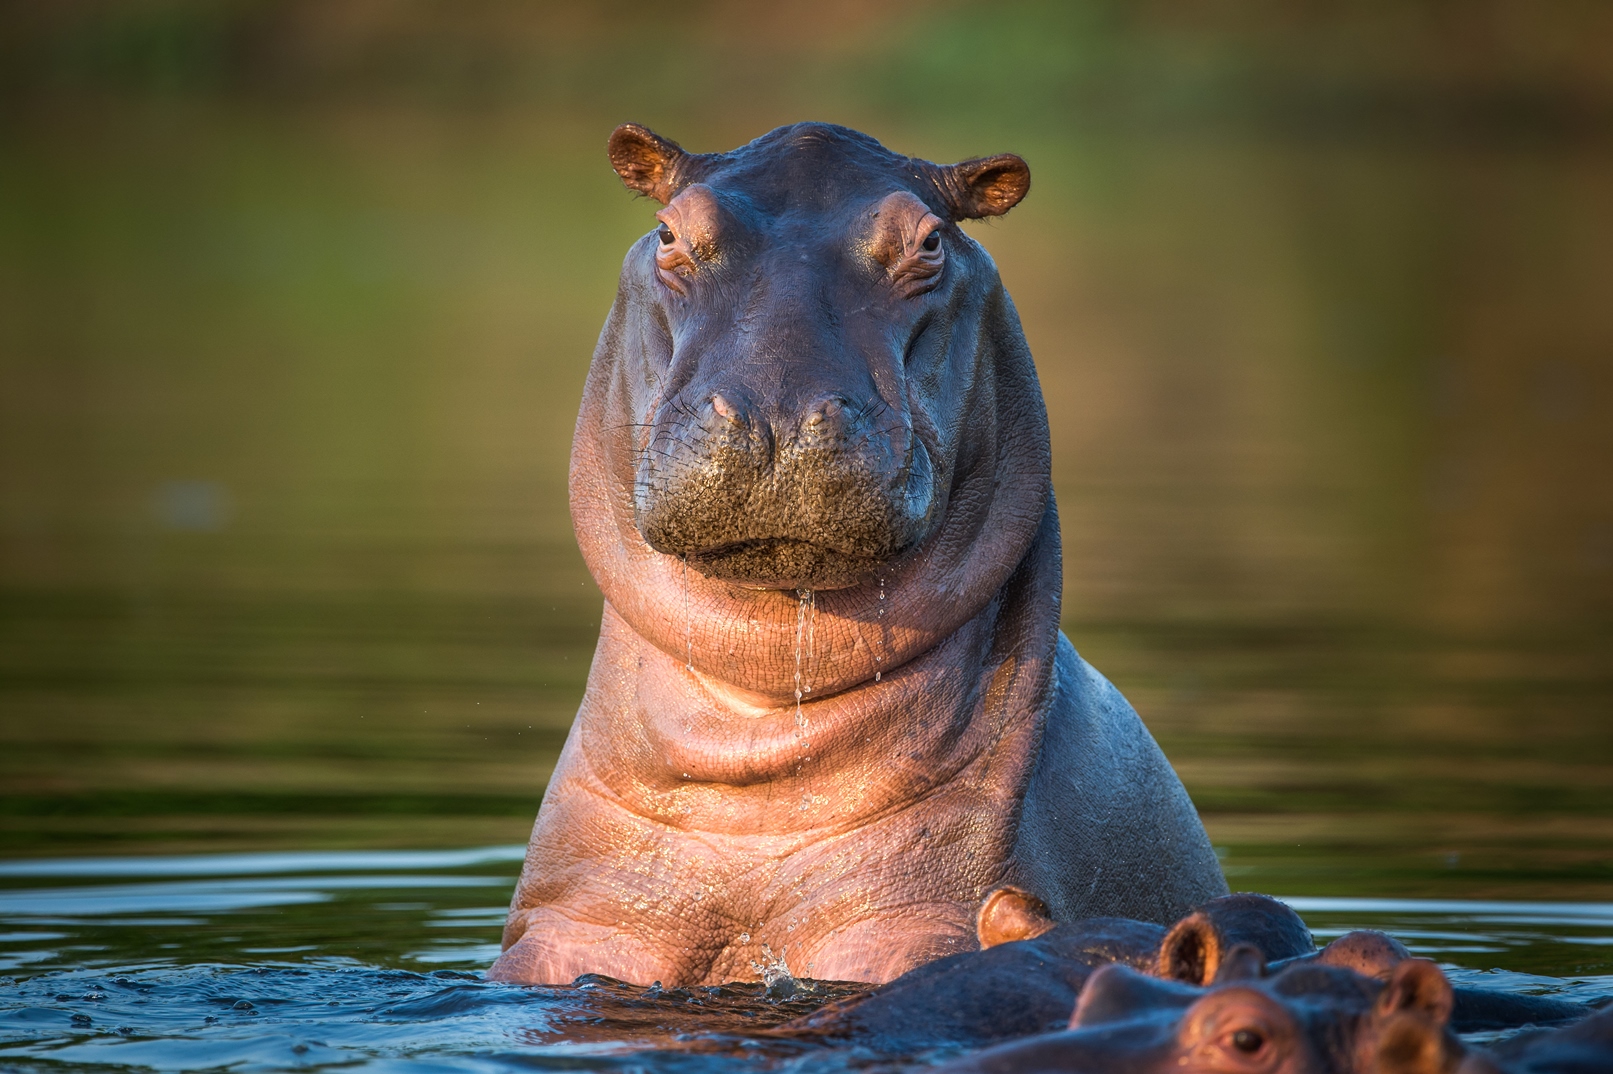 A hippo bathing